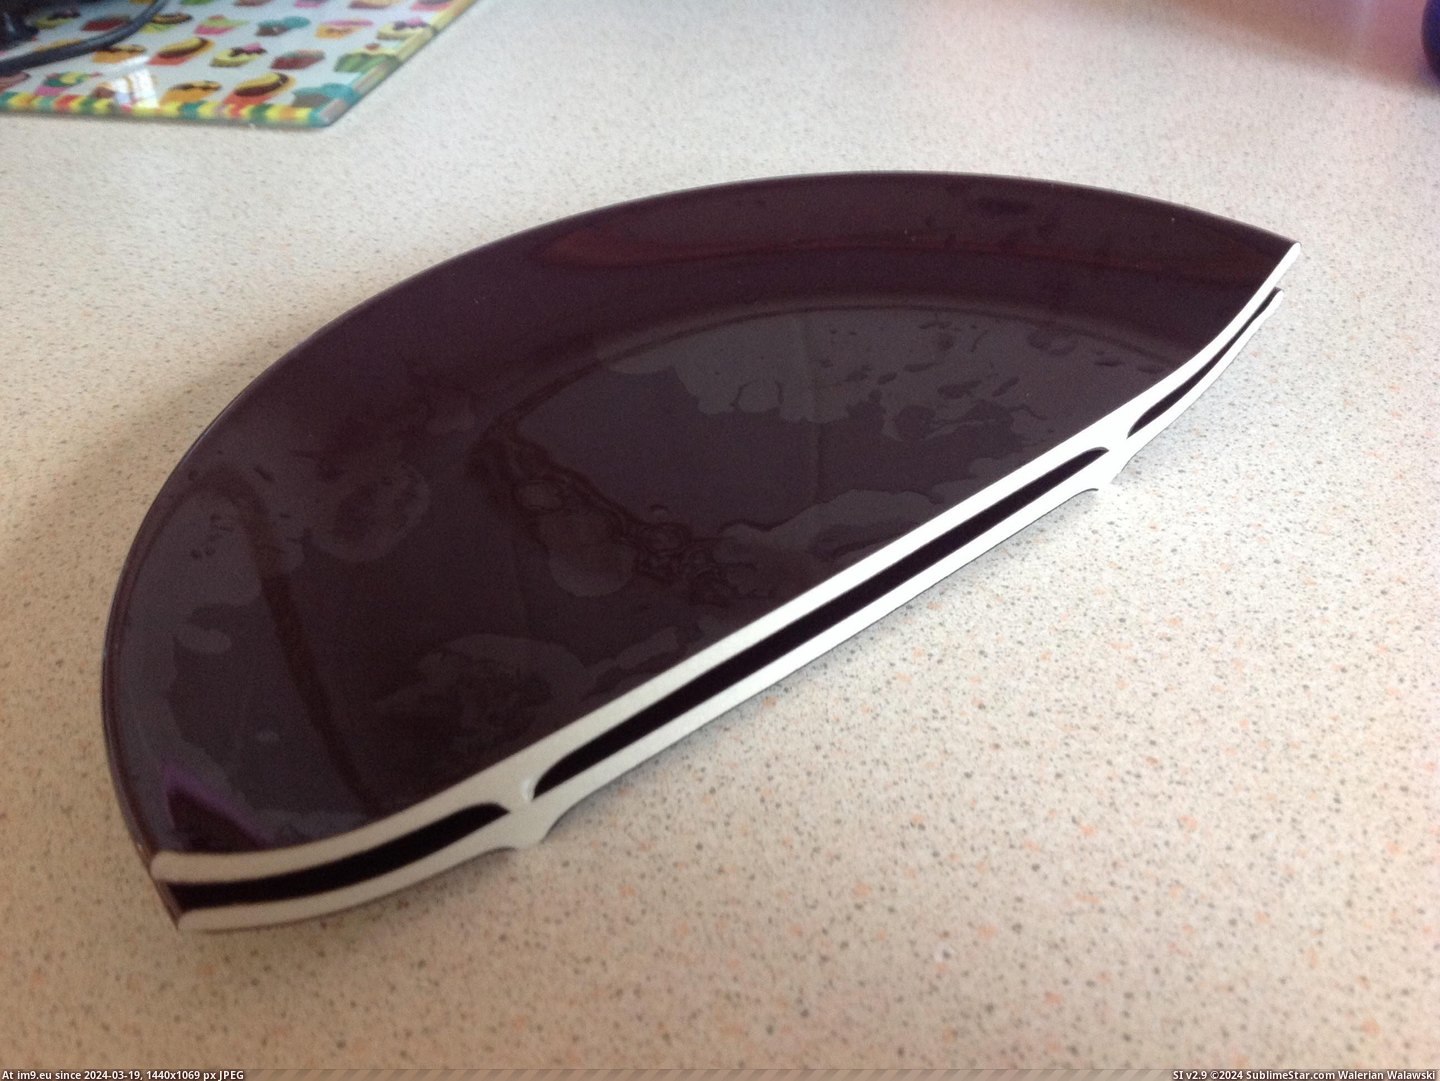 #Broke #Plate #Washing #Dropped [Mildlyinteresting] Dropped a plate when washing up - it broke exactly in half Pic. (Изображение из альбом My r/MILDLYINTERESTING favs))